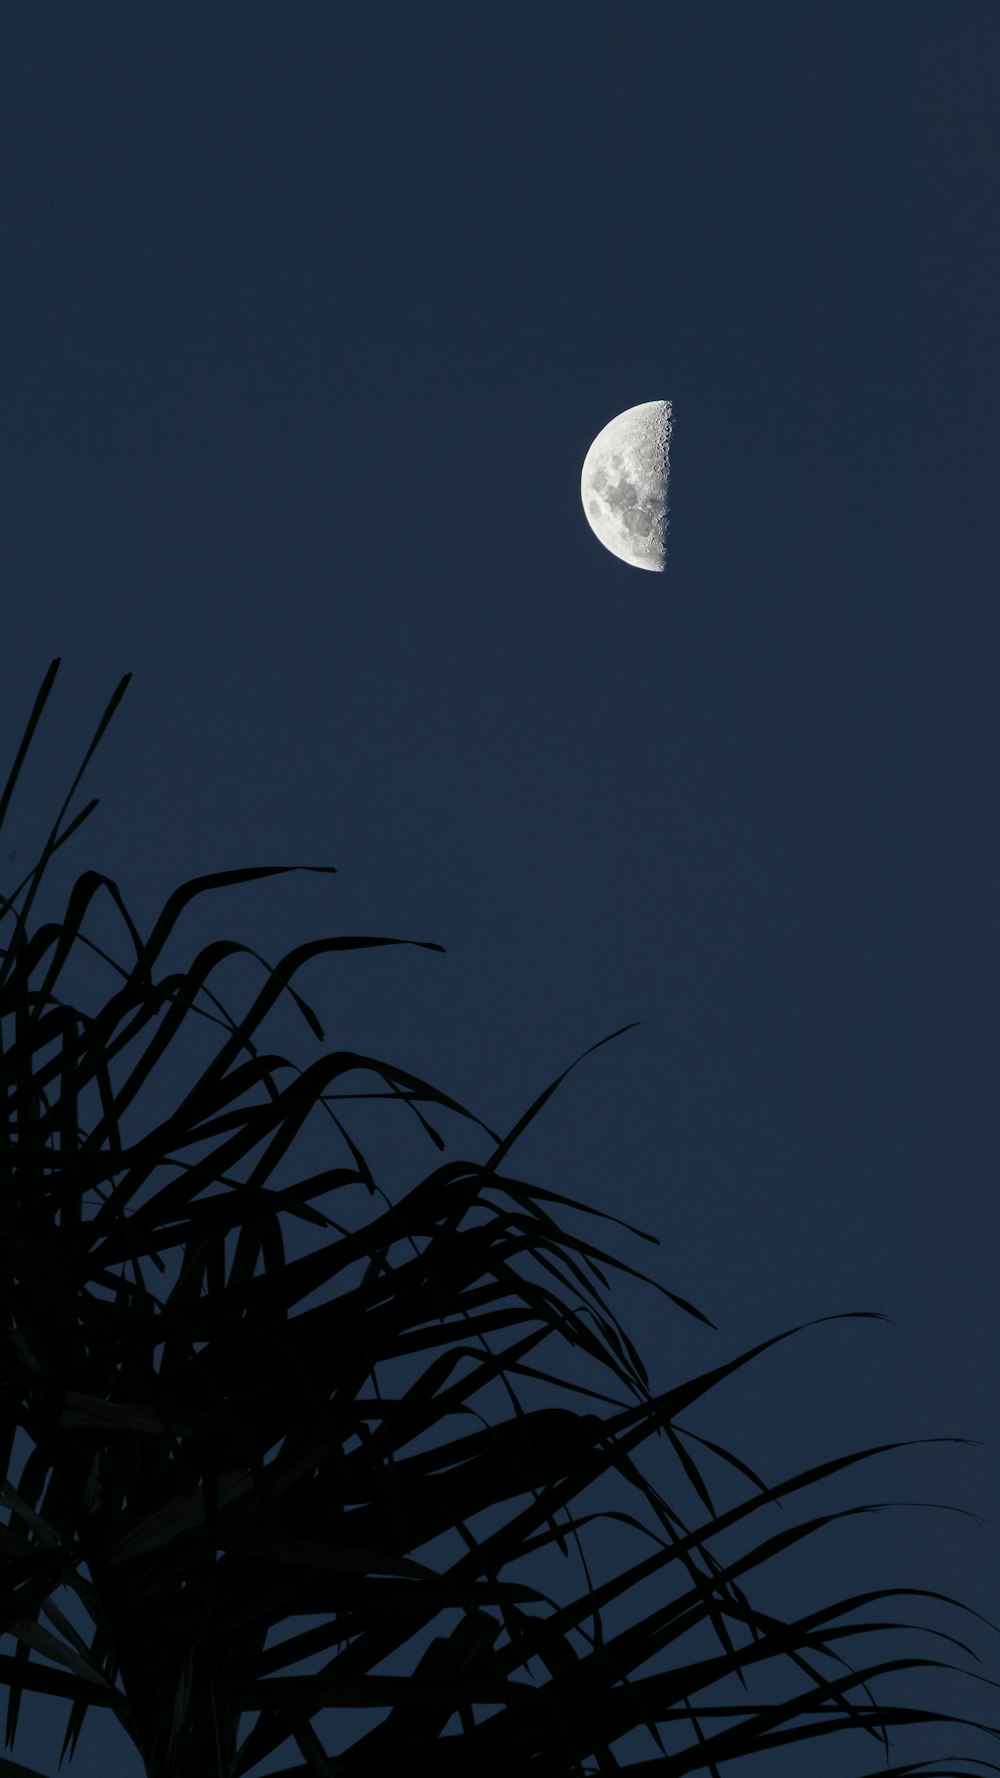 La luna è vista attraverso i rami di una palma